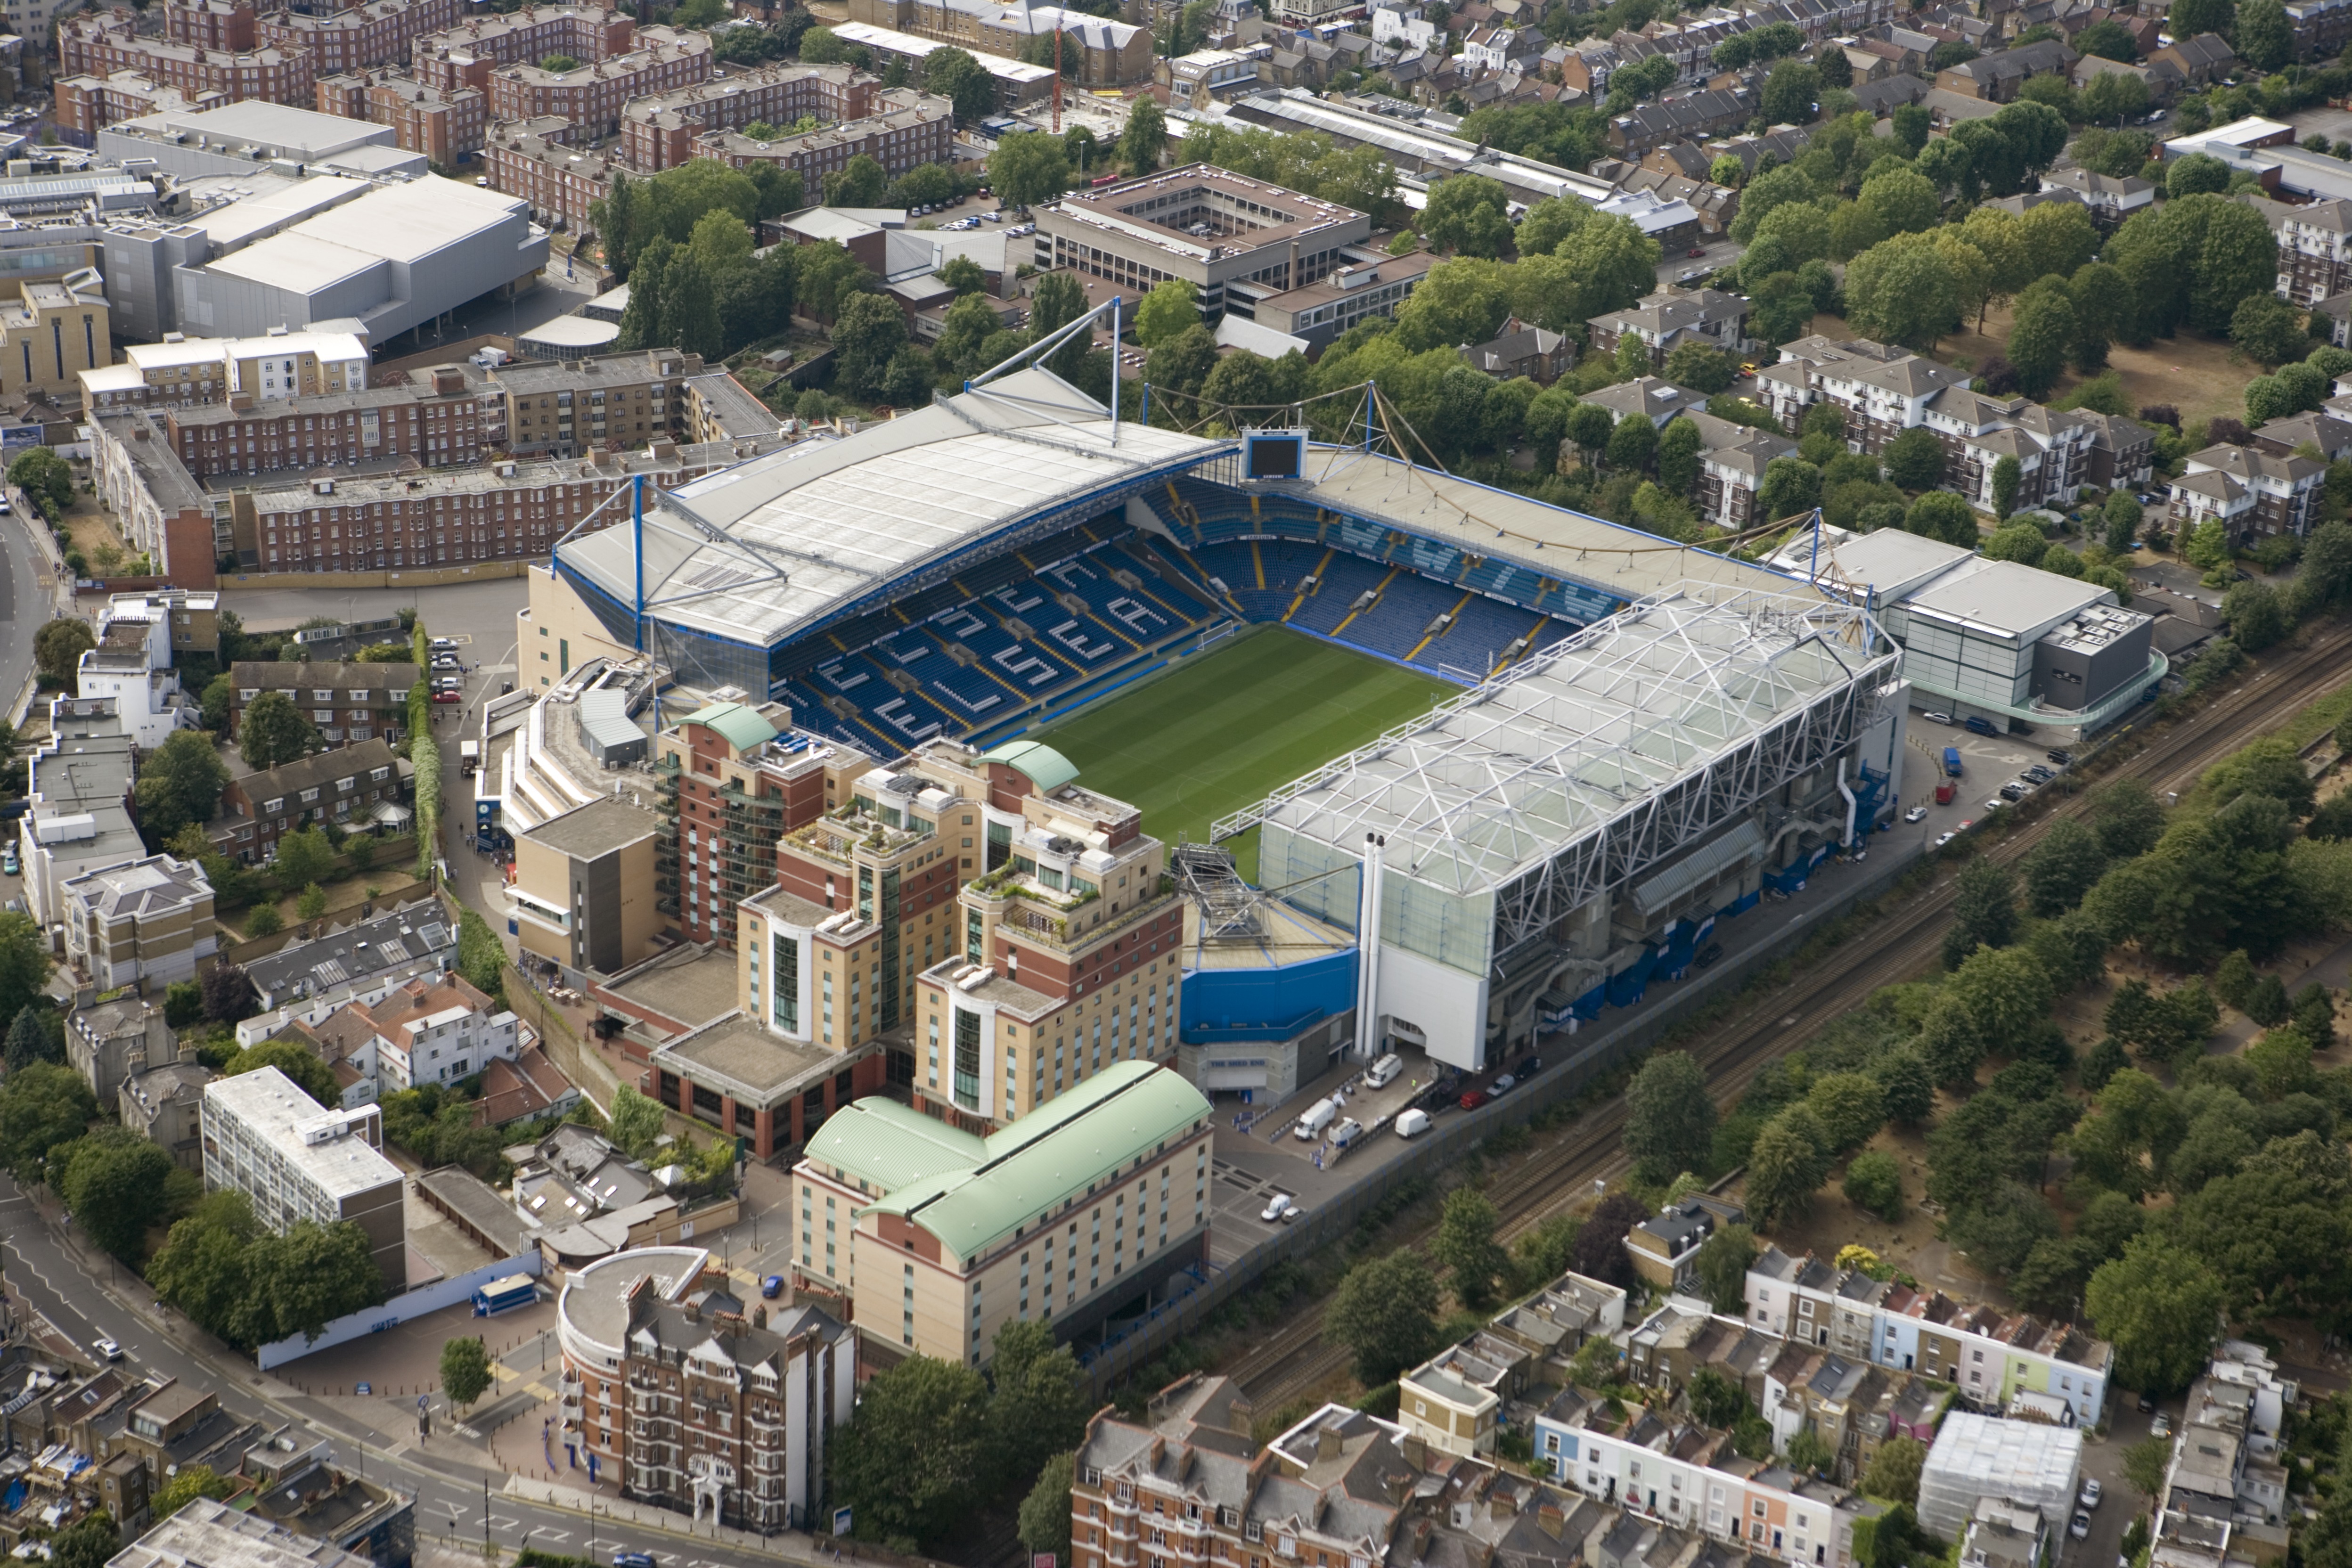 Stamford Bridge Football Ground, London, 2006